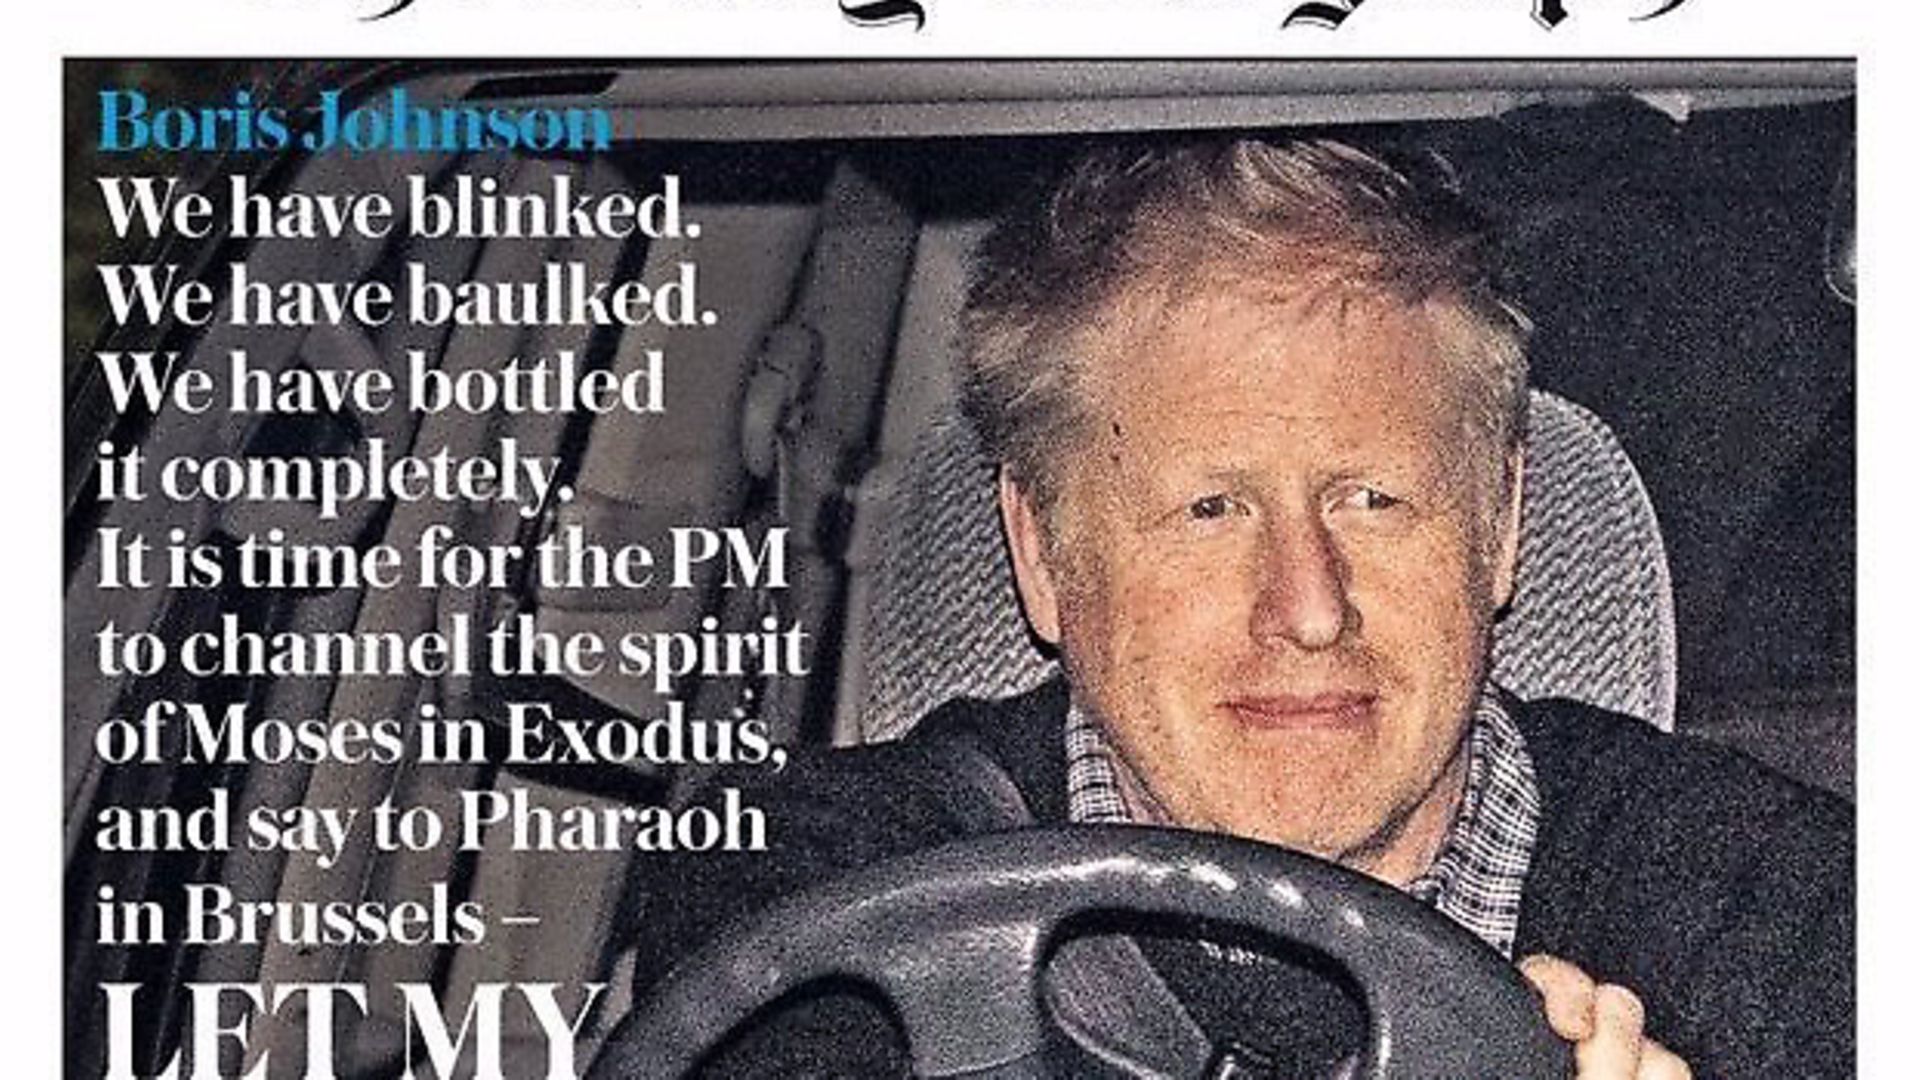 Boris Johnson in the Daily Telegraph. - 